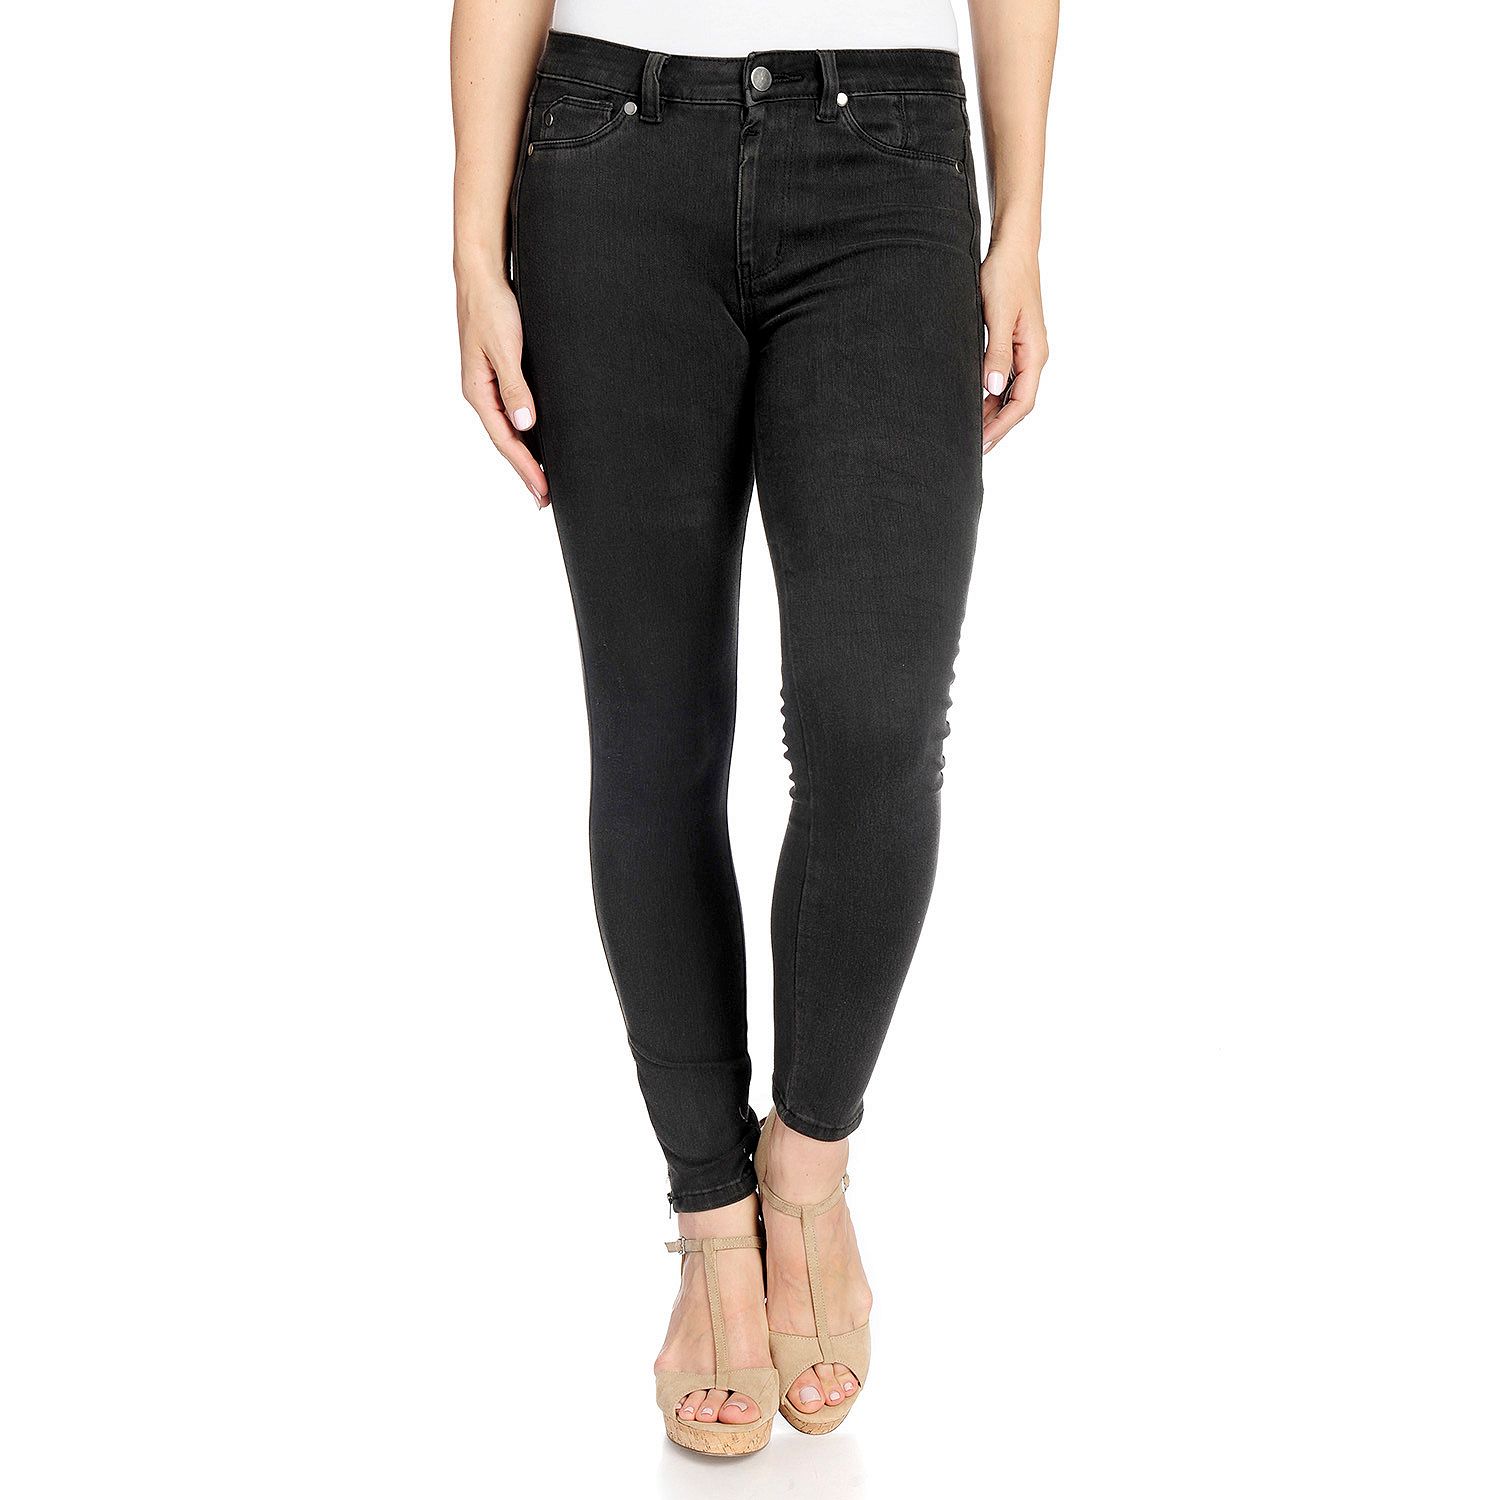 (ShopHQ) Kate & Mallory Asymmetrical Flounce Hem Top OR Jeans ...